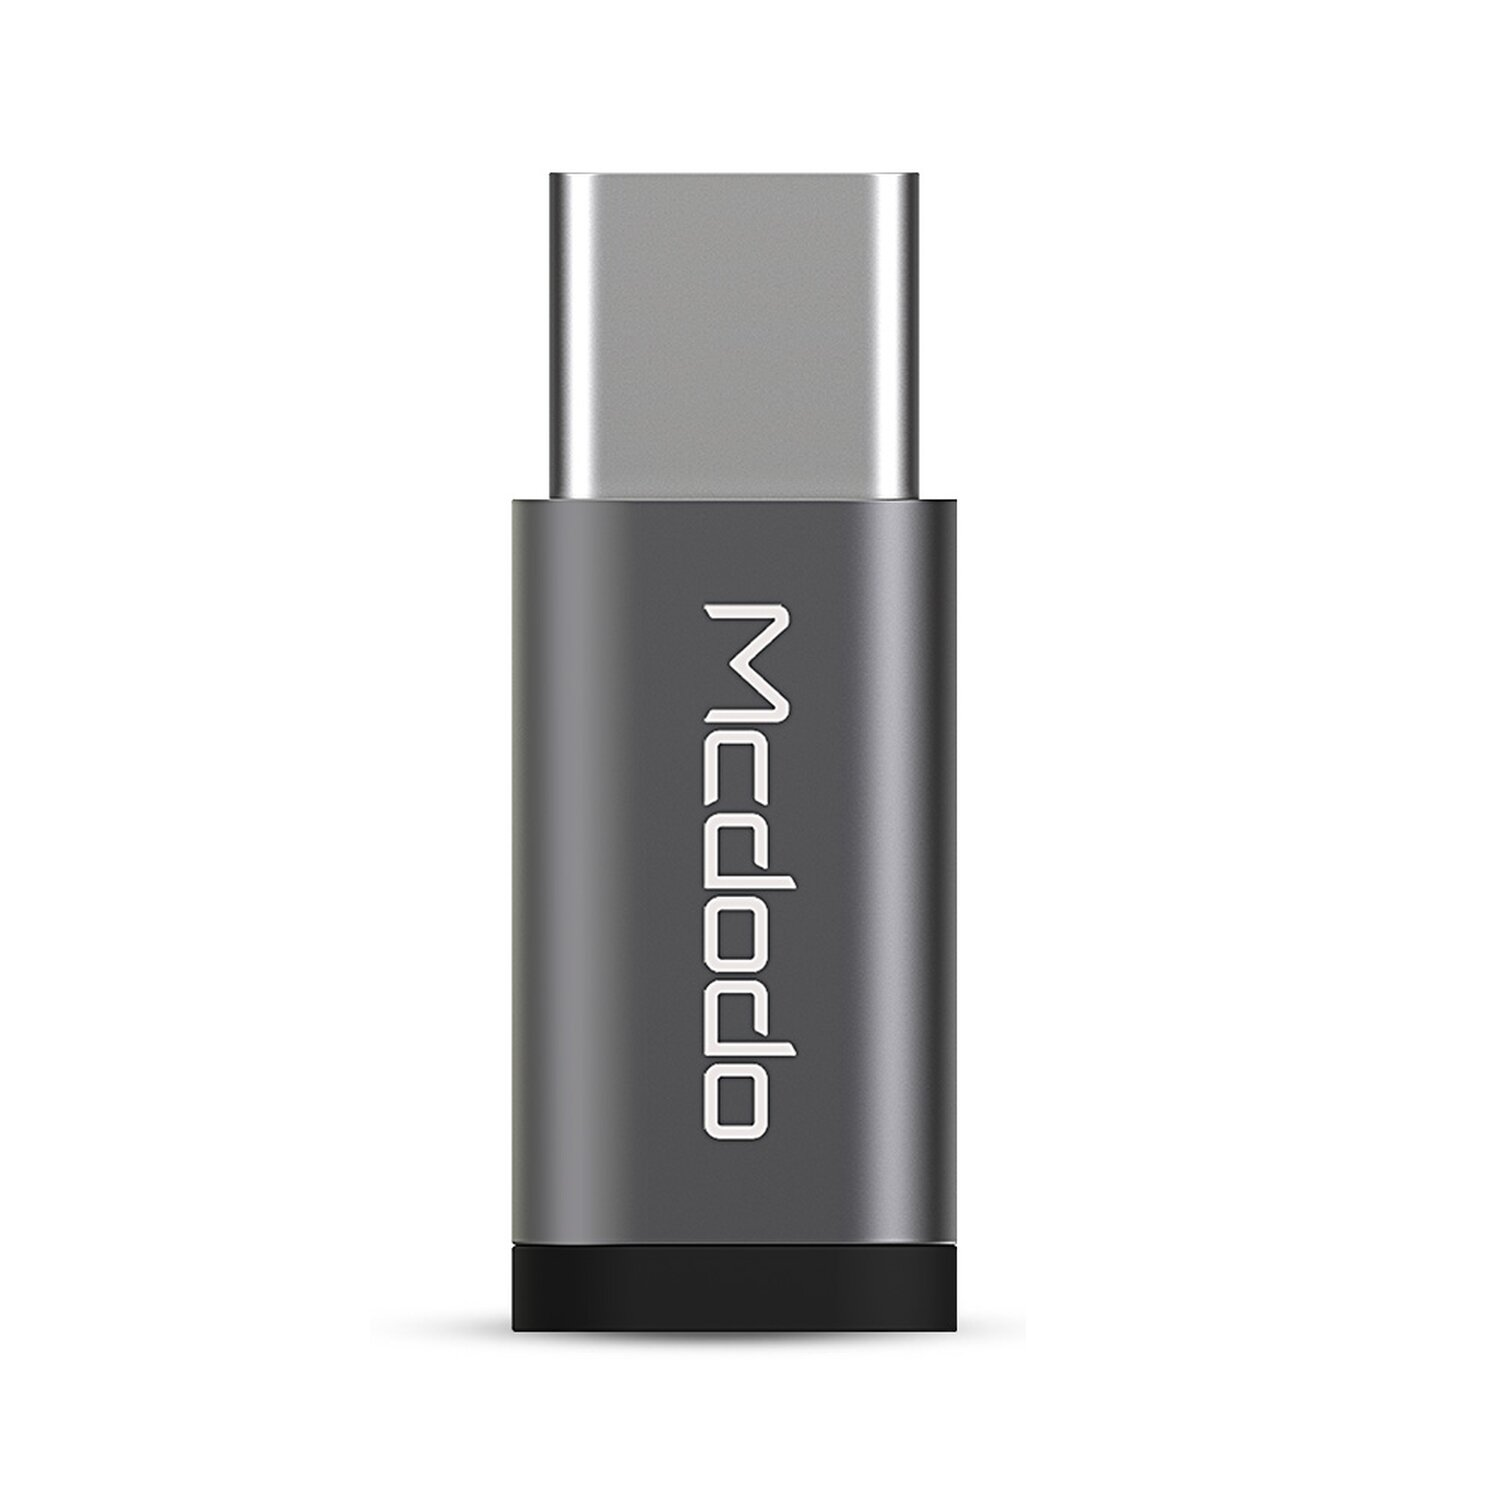 MCDODO Micro-USB auf Kabeladapter Typ-C